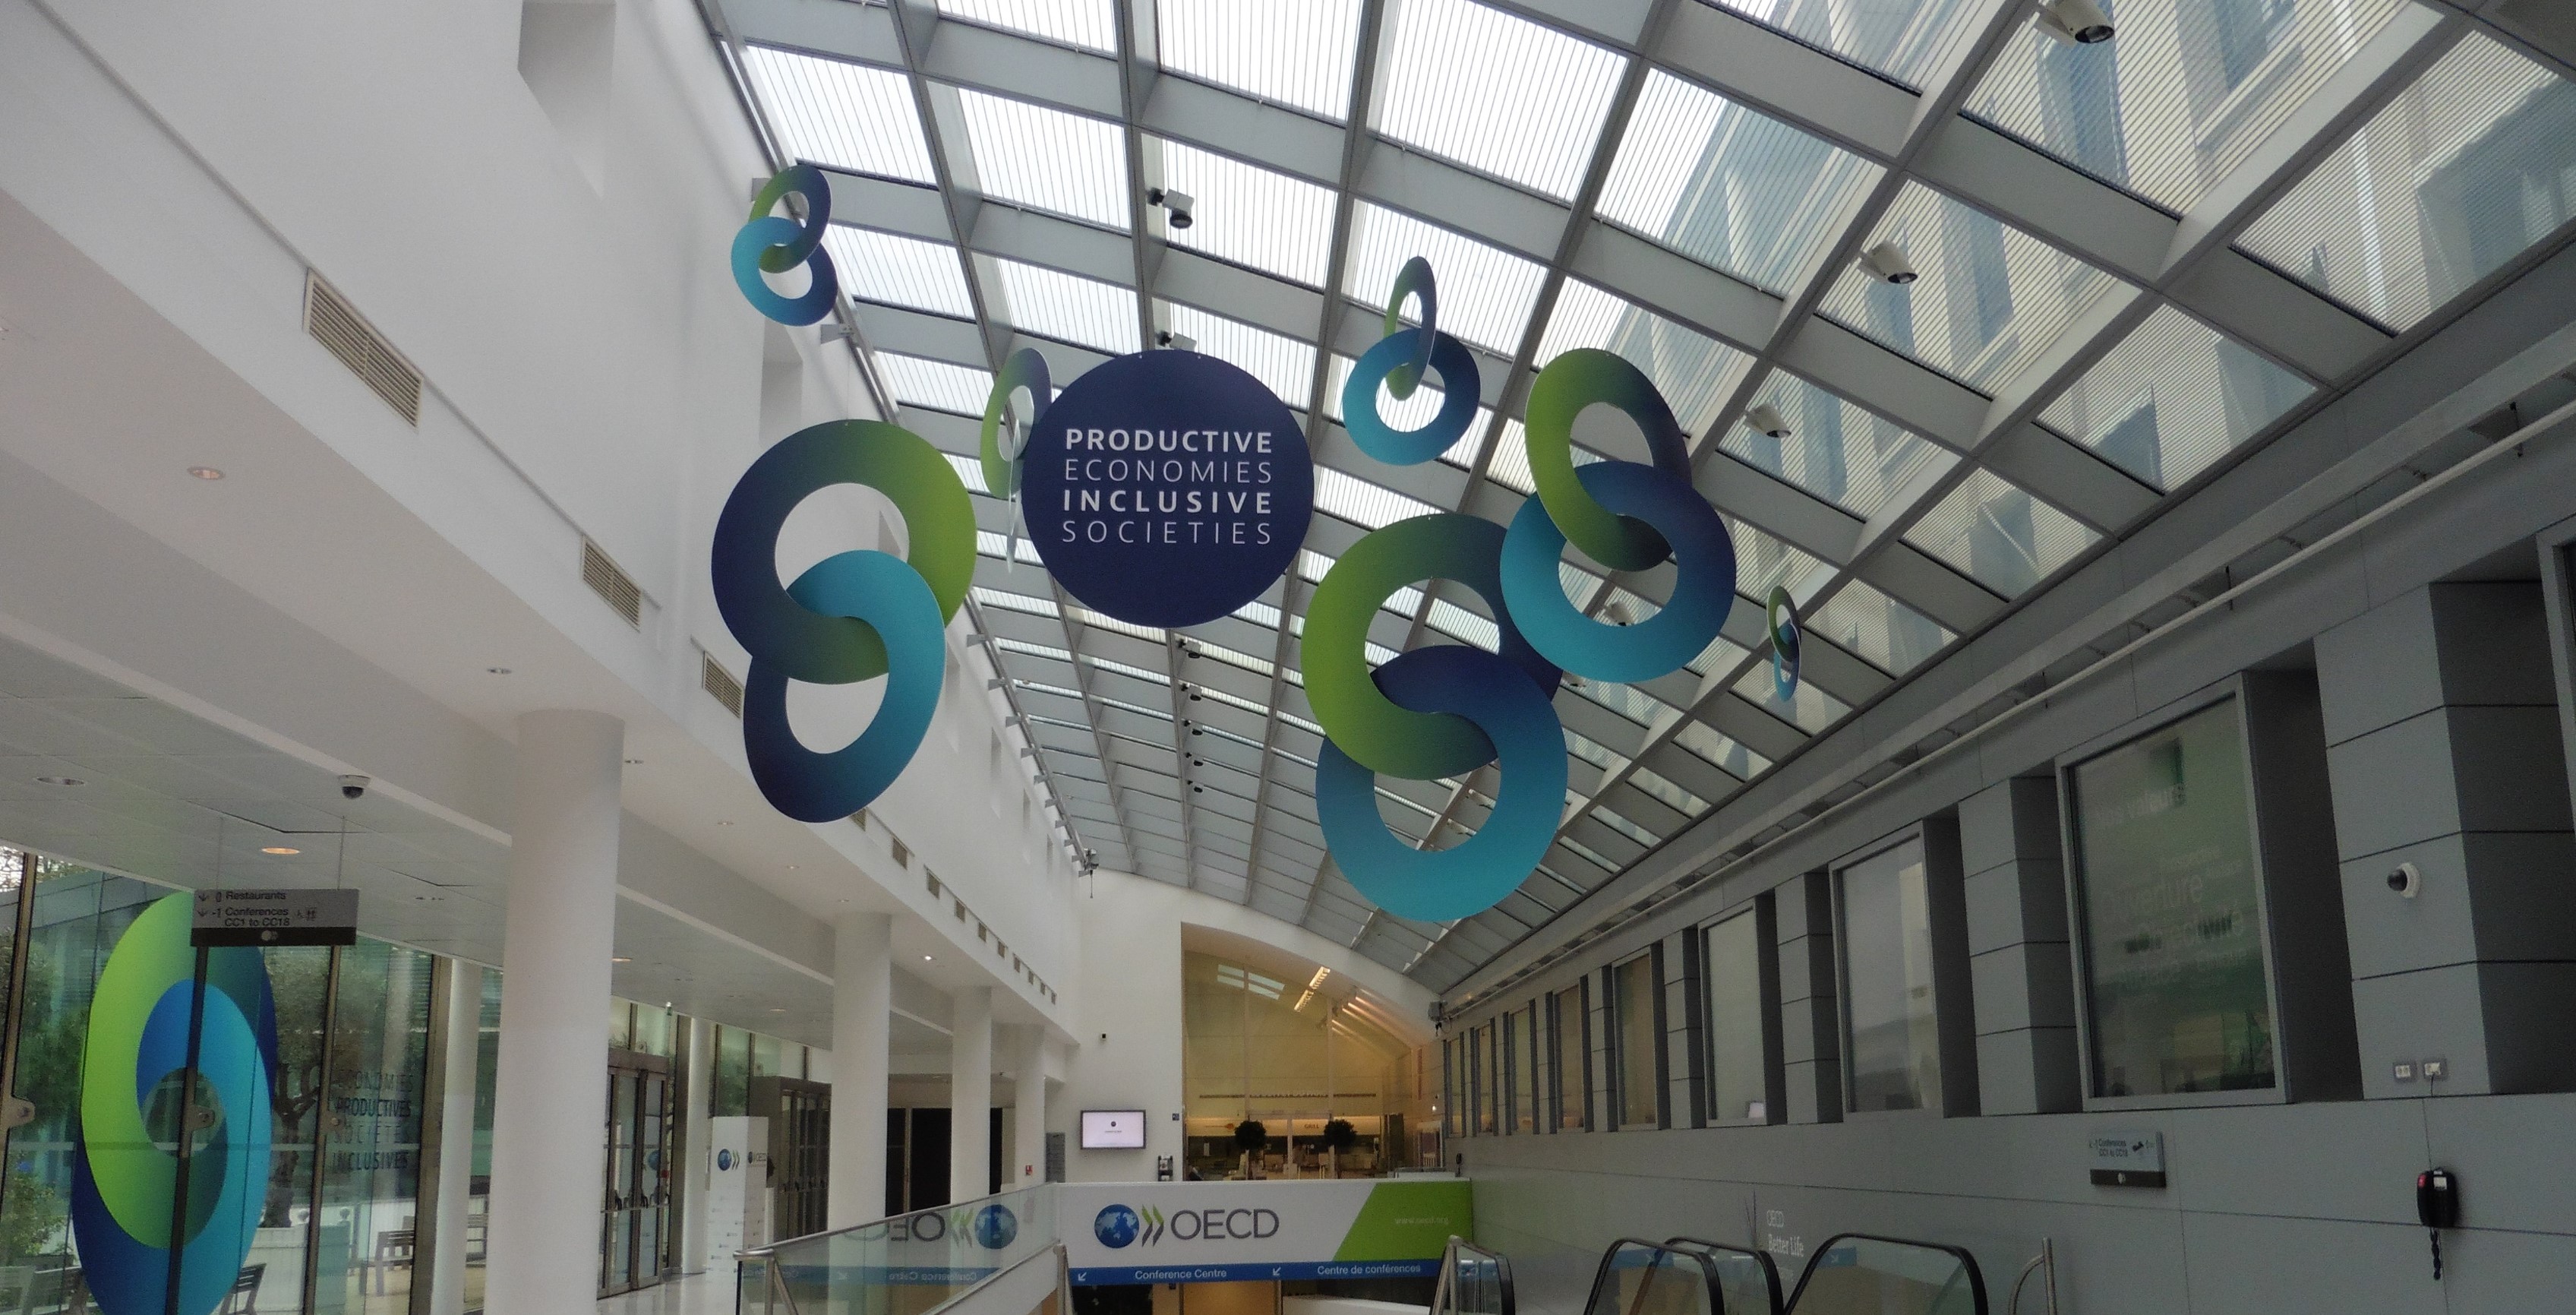 OECD building in Paris